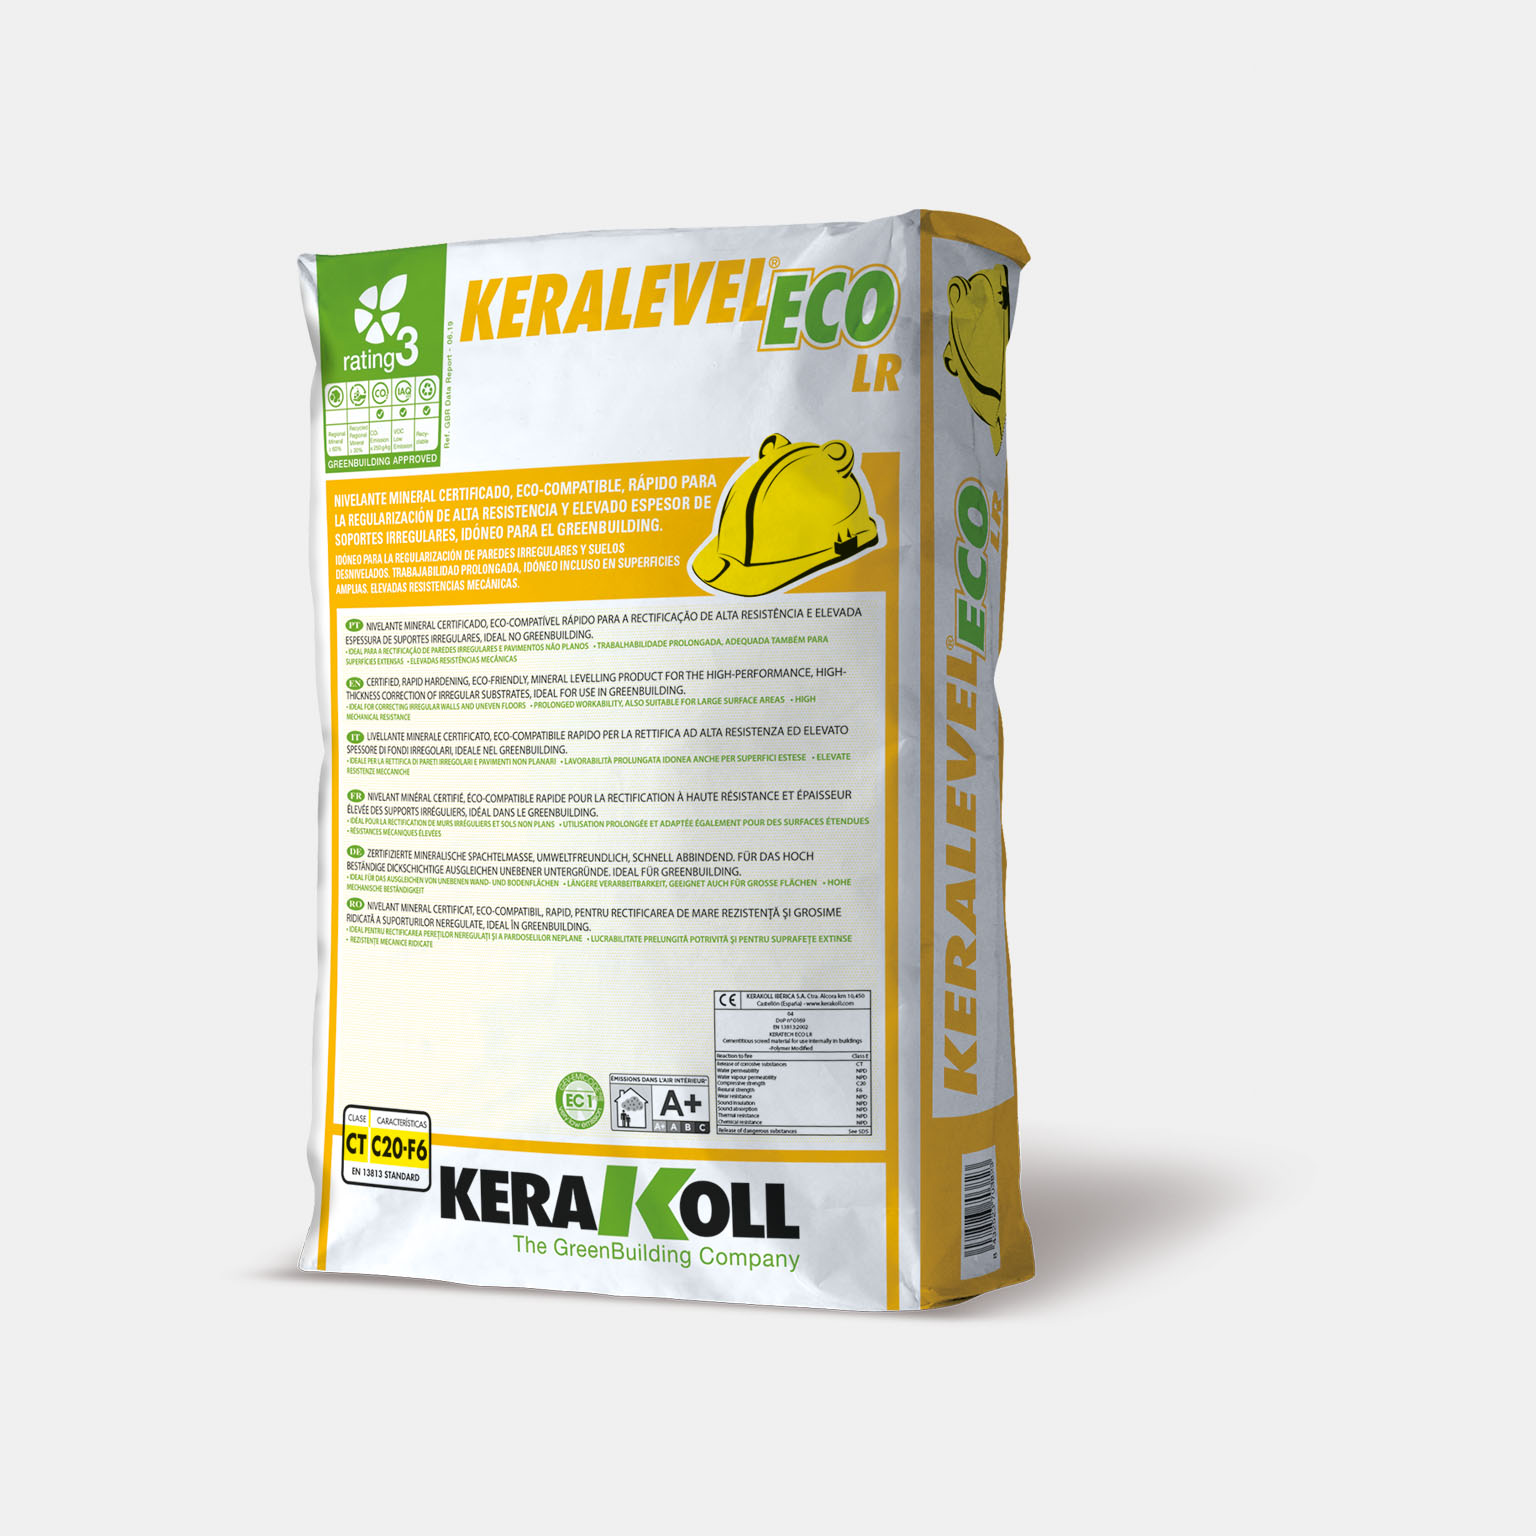 Keralevel Eco LR - immagine pack